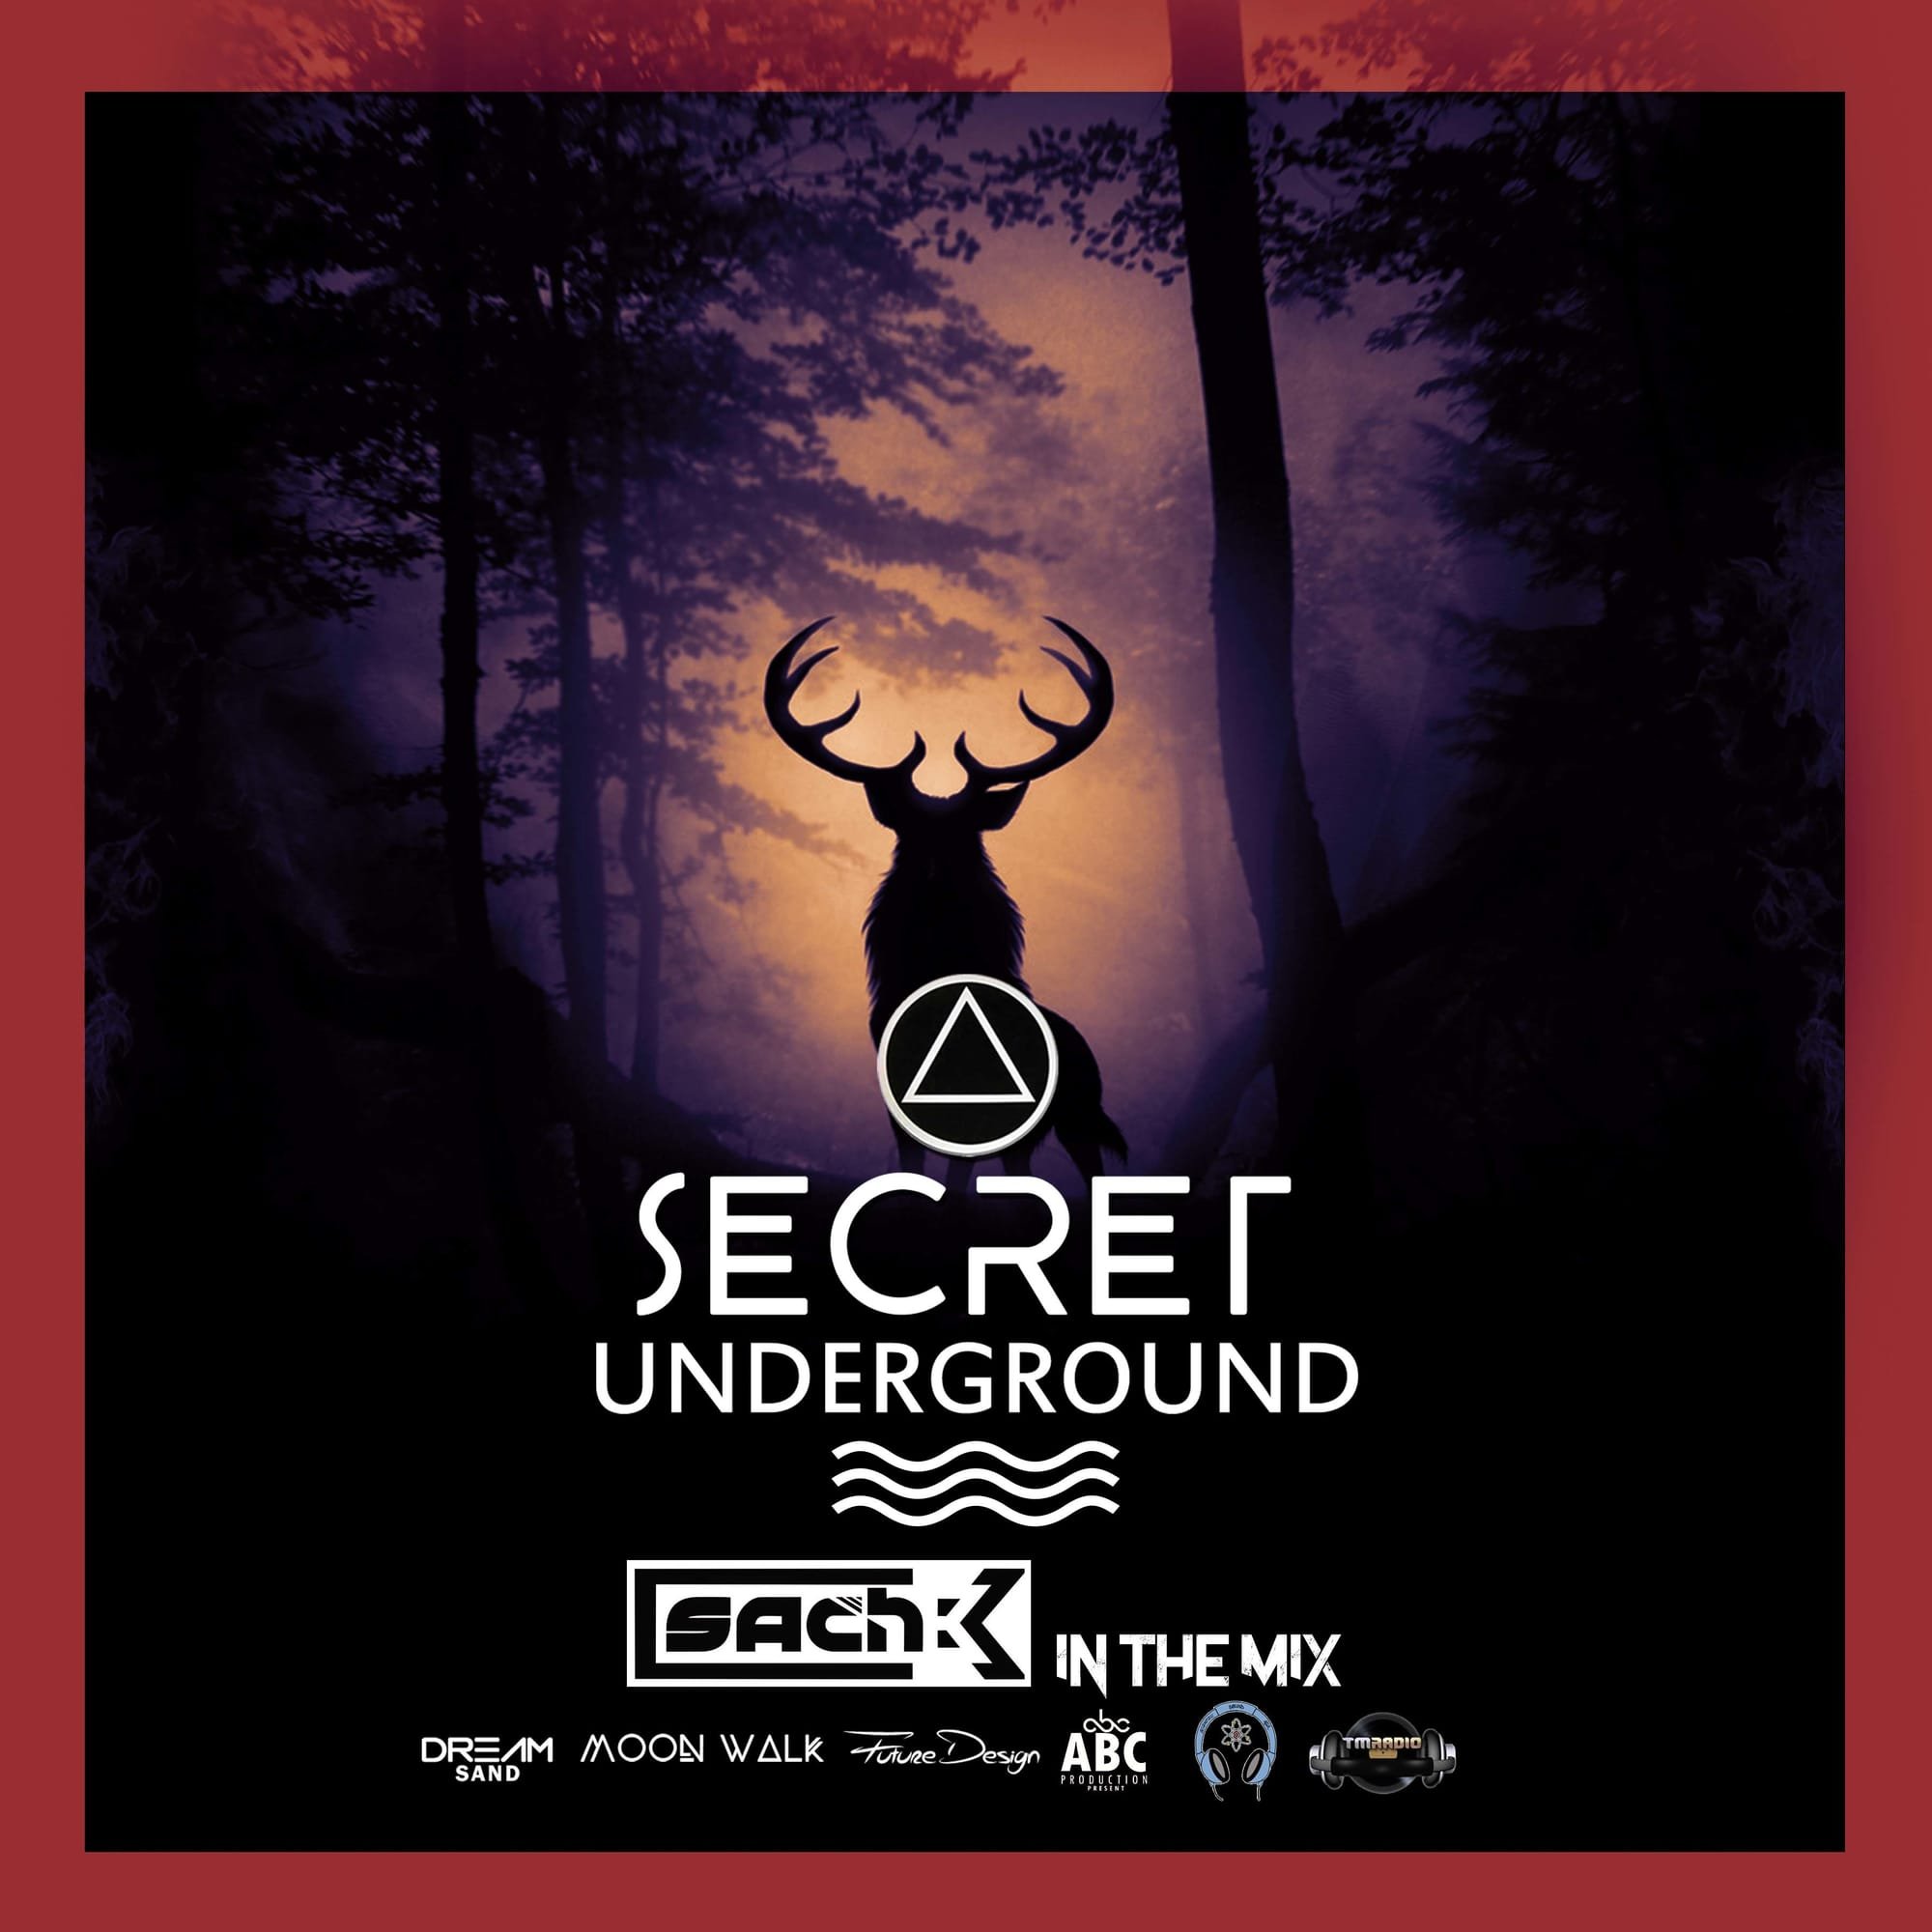 Secret Underground announce playlist and guest SACH K.